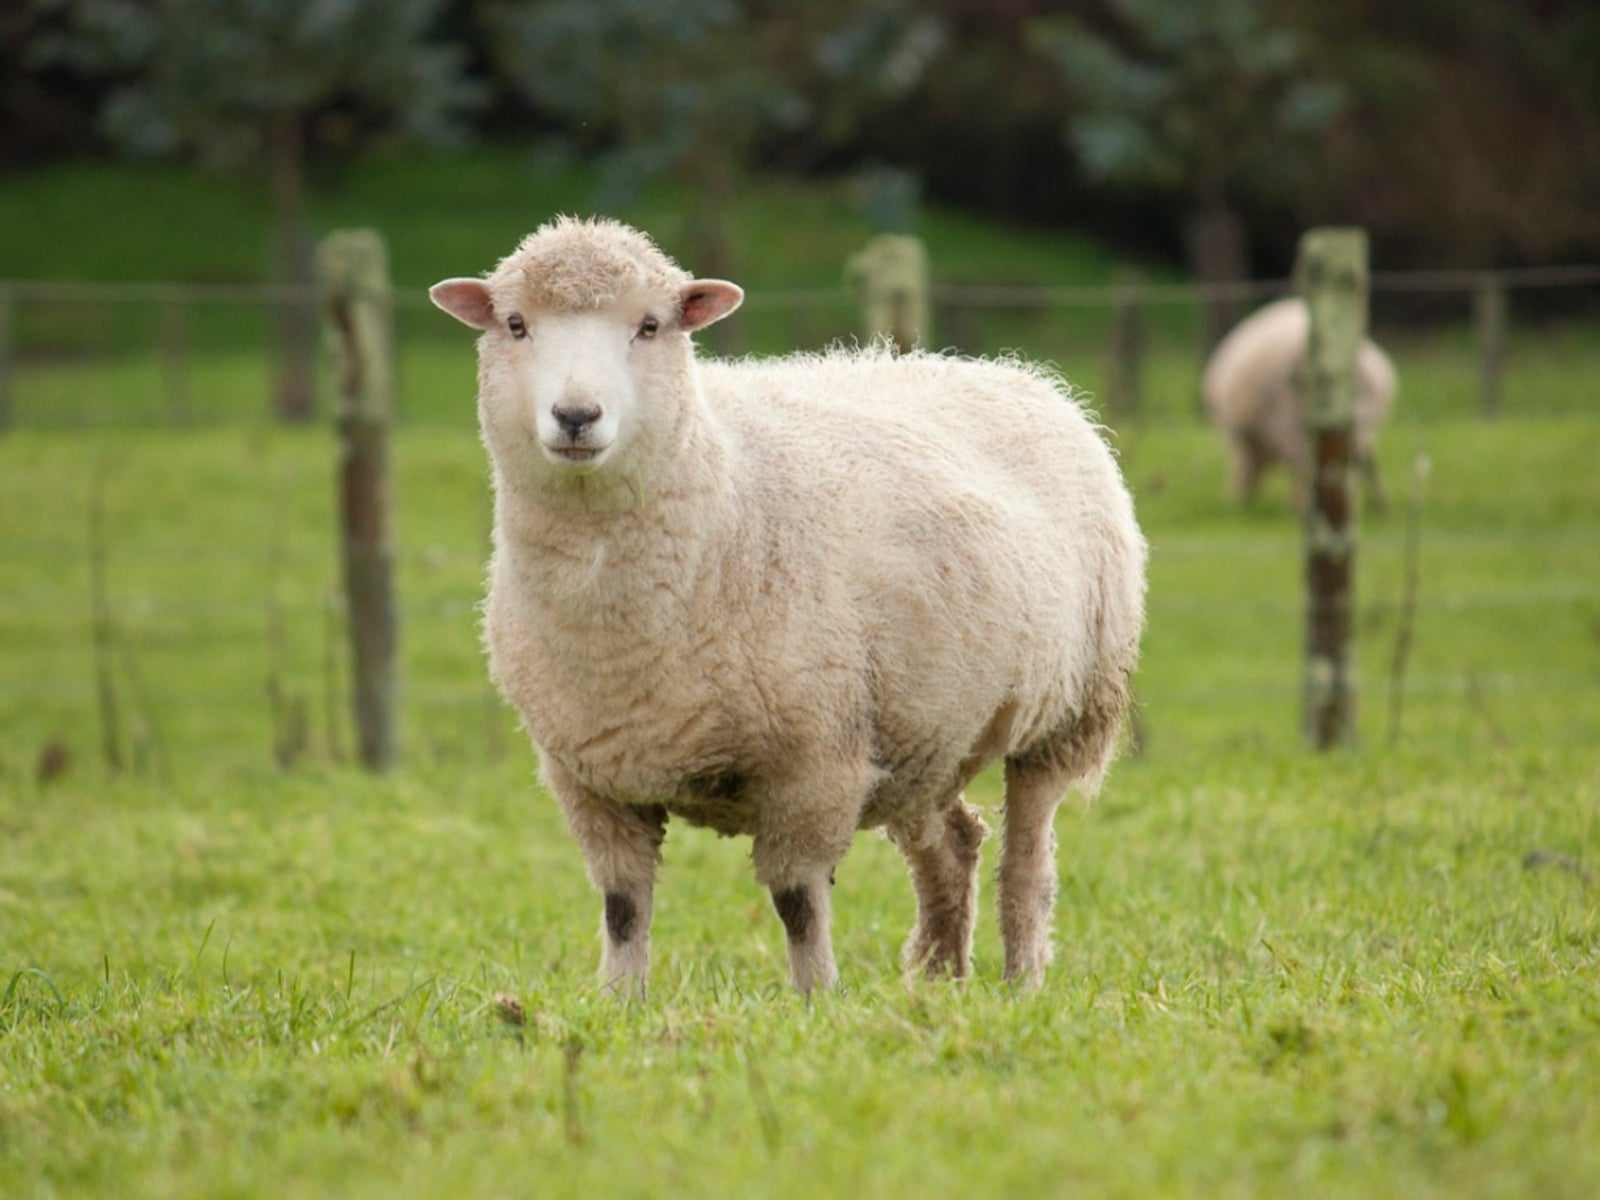 Using Sheep Manure As Fertilizer Is